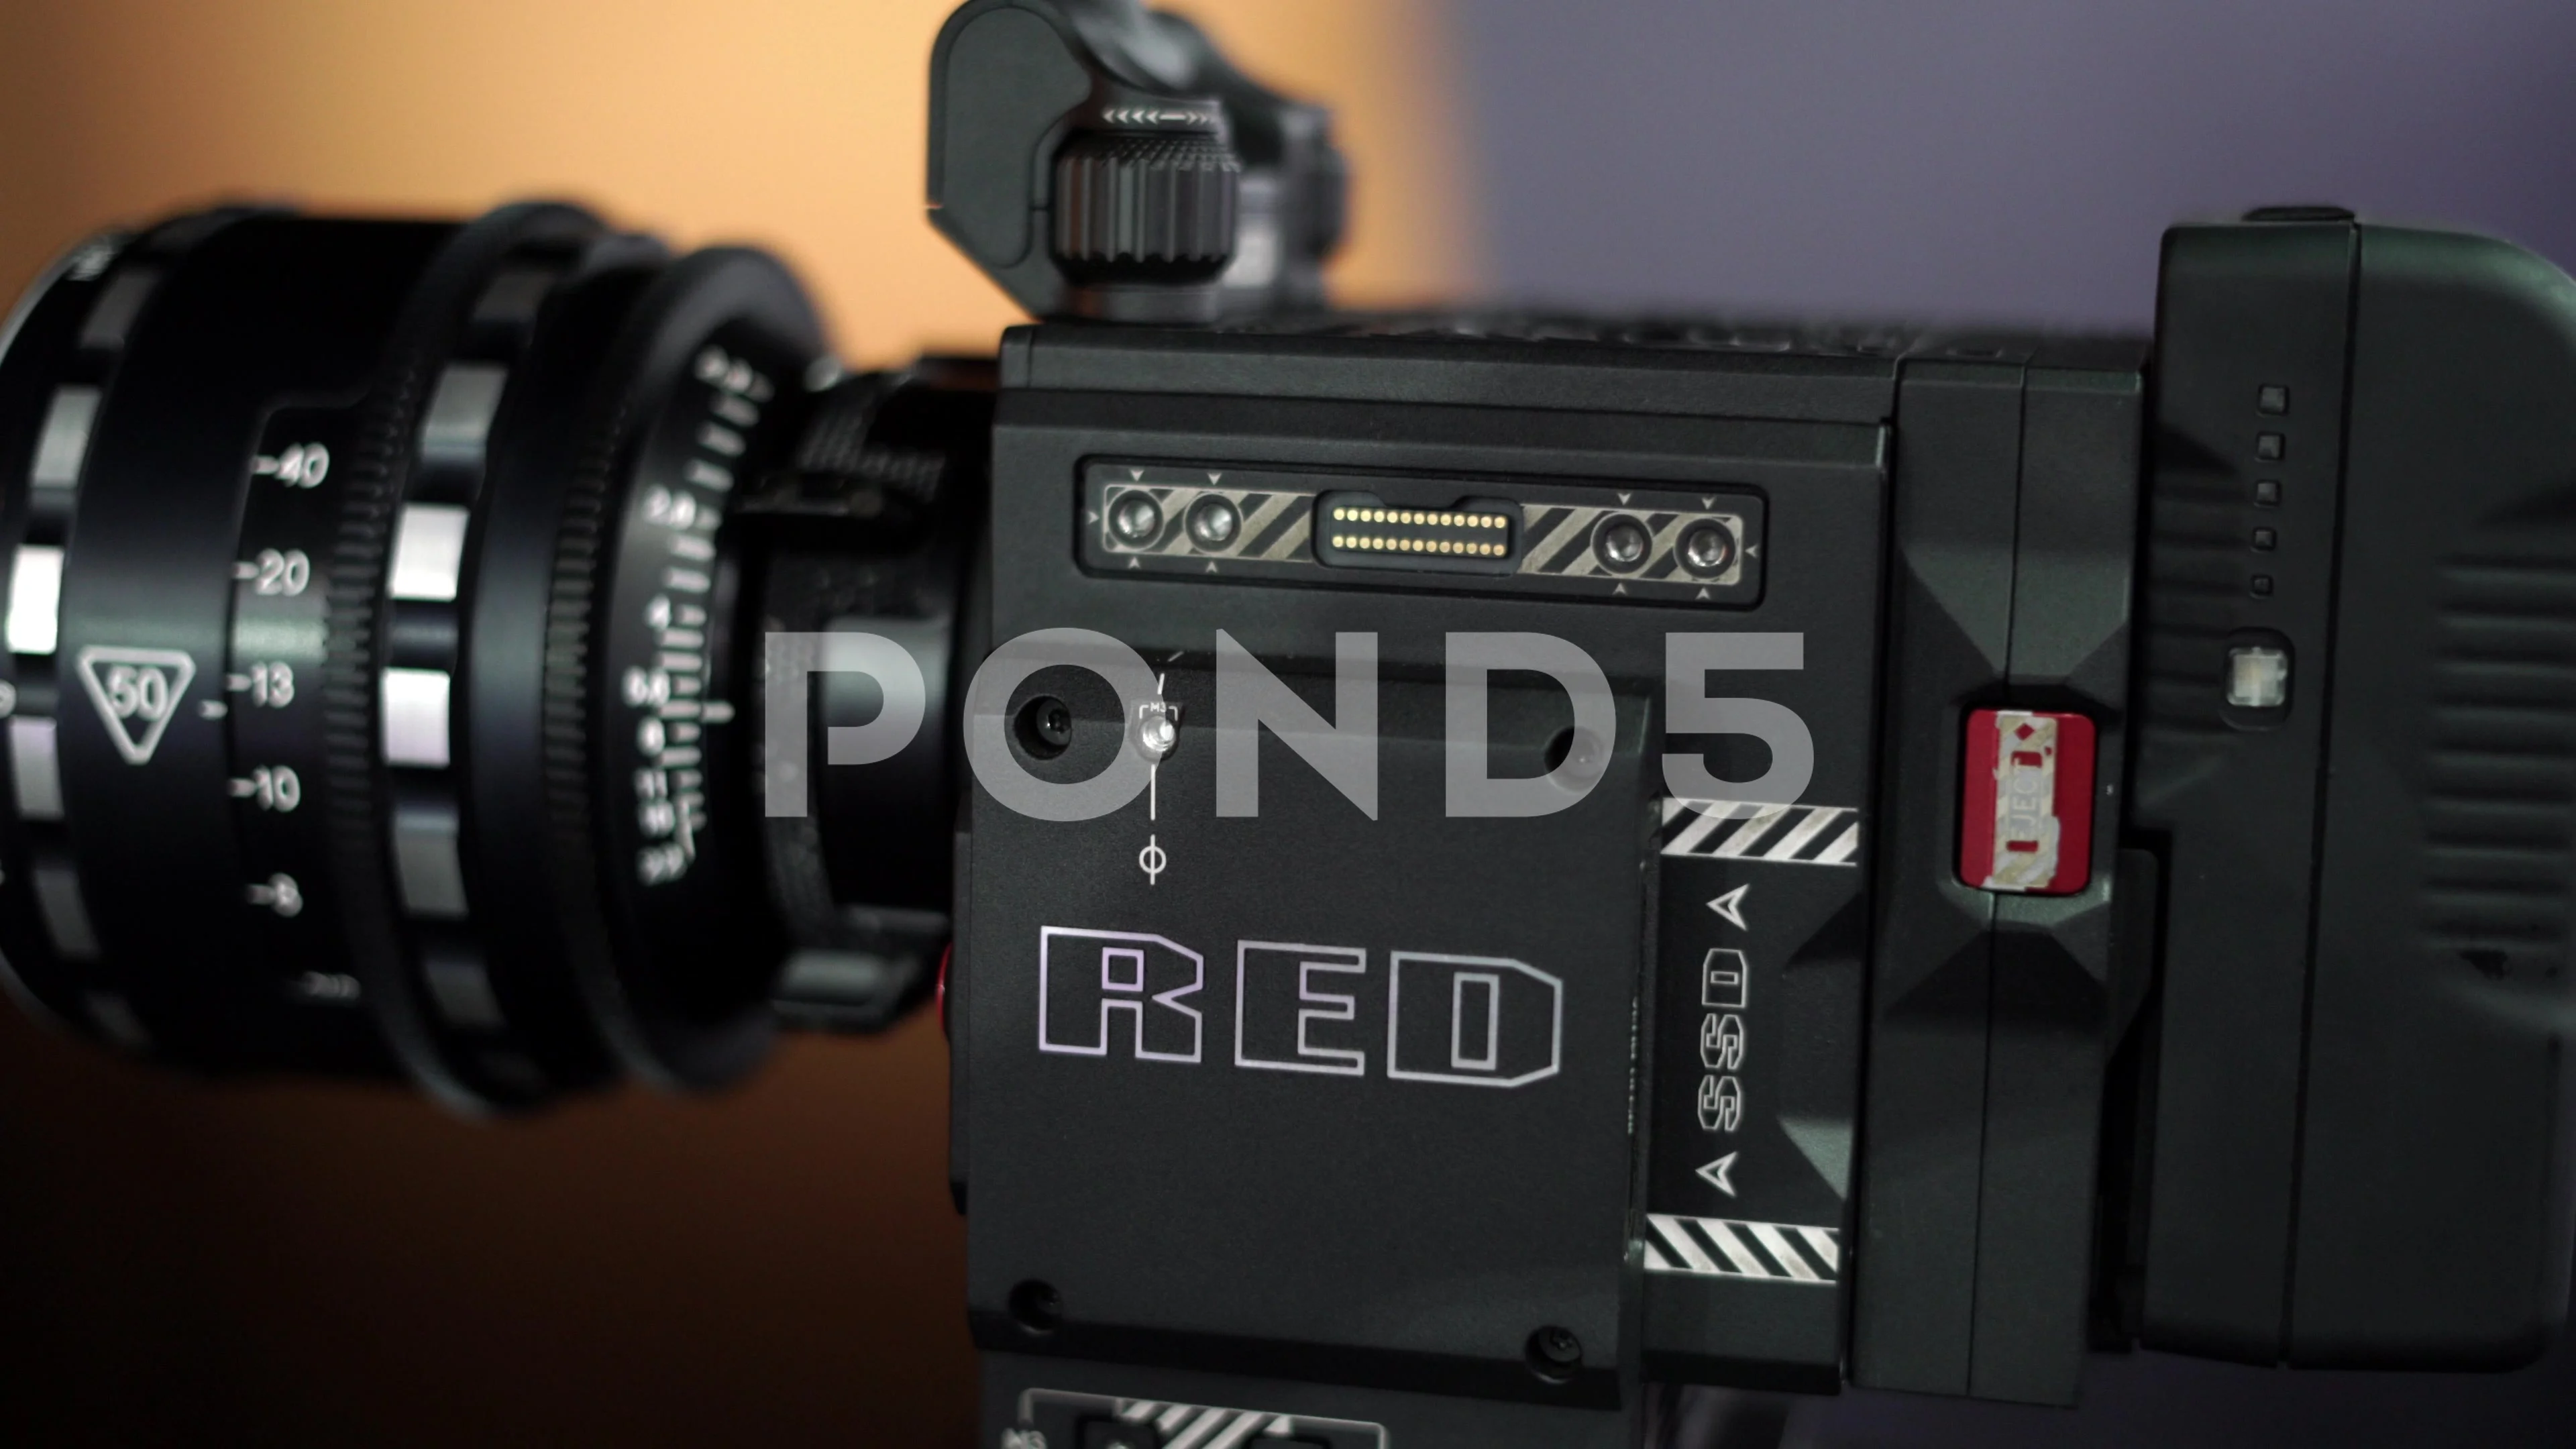 red dragon camera footage